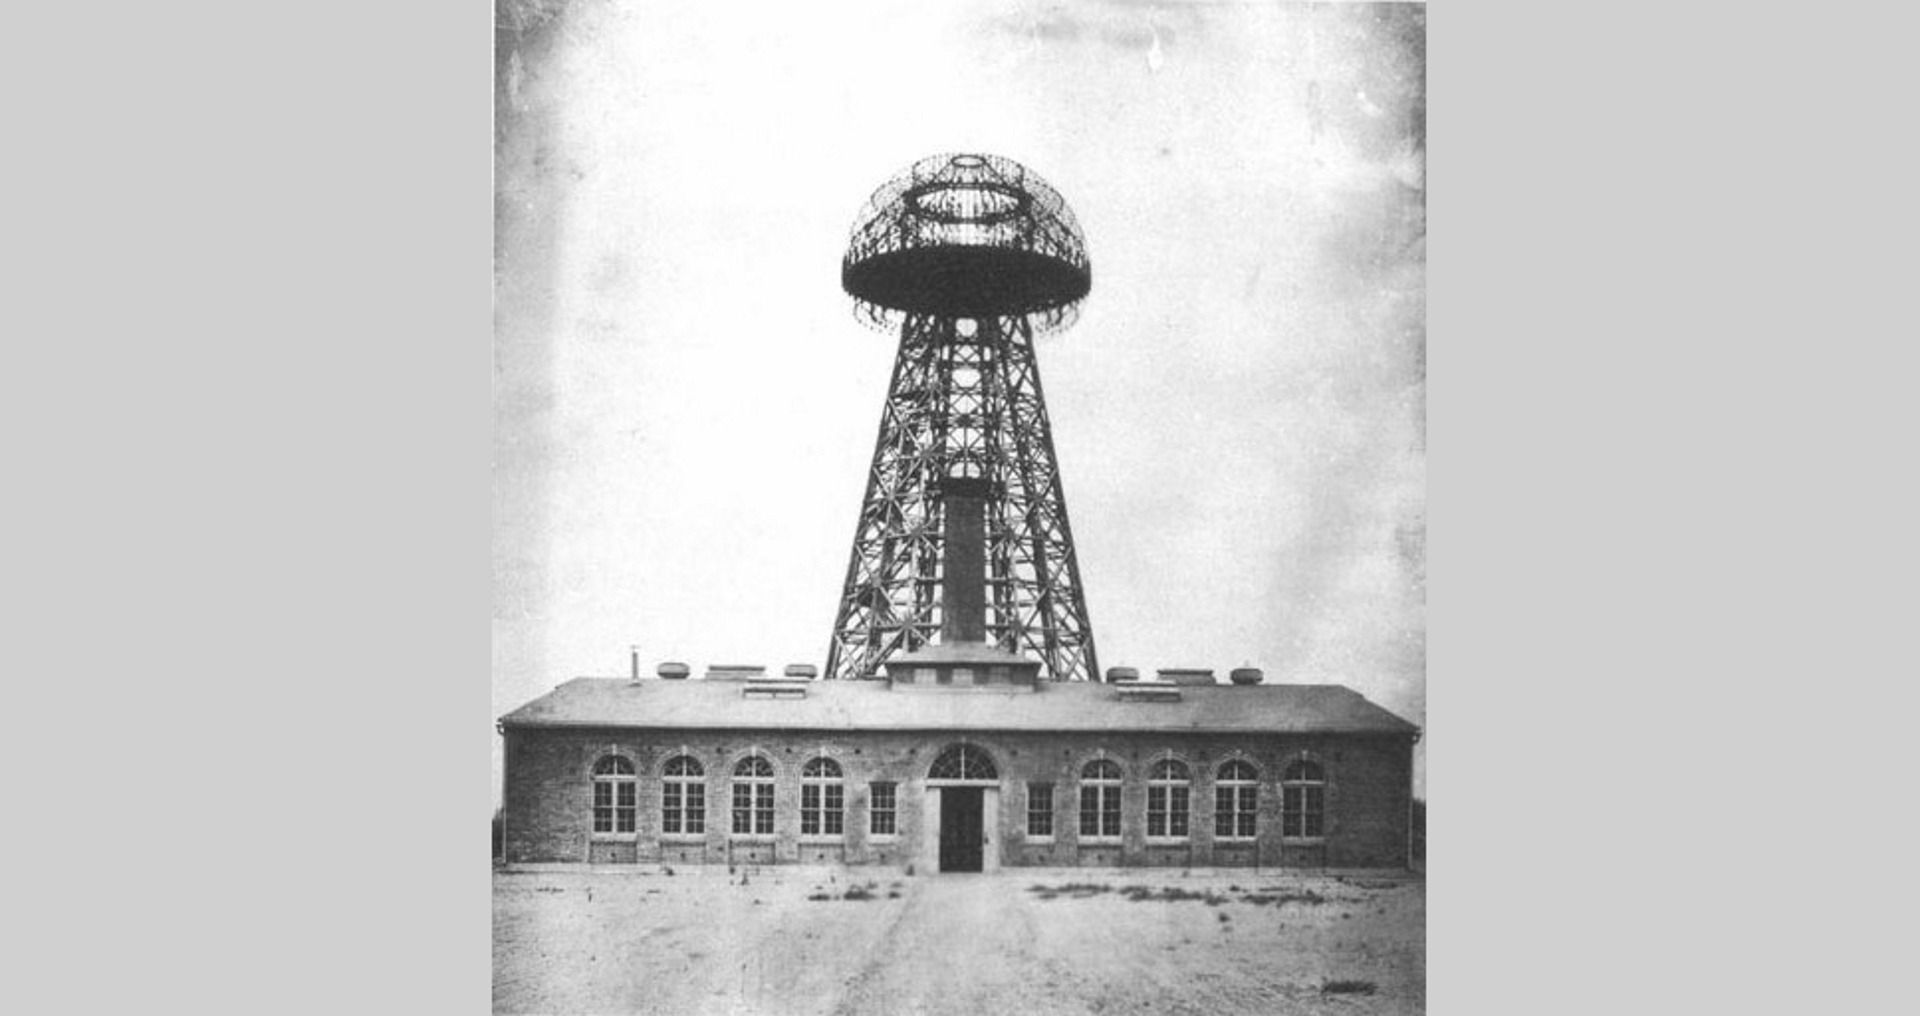 Tesla Broadcast Tower 1904